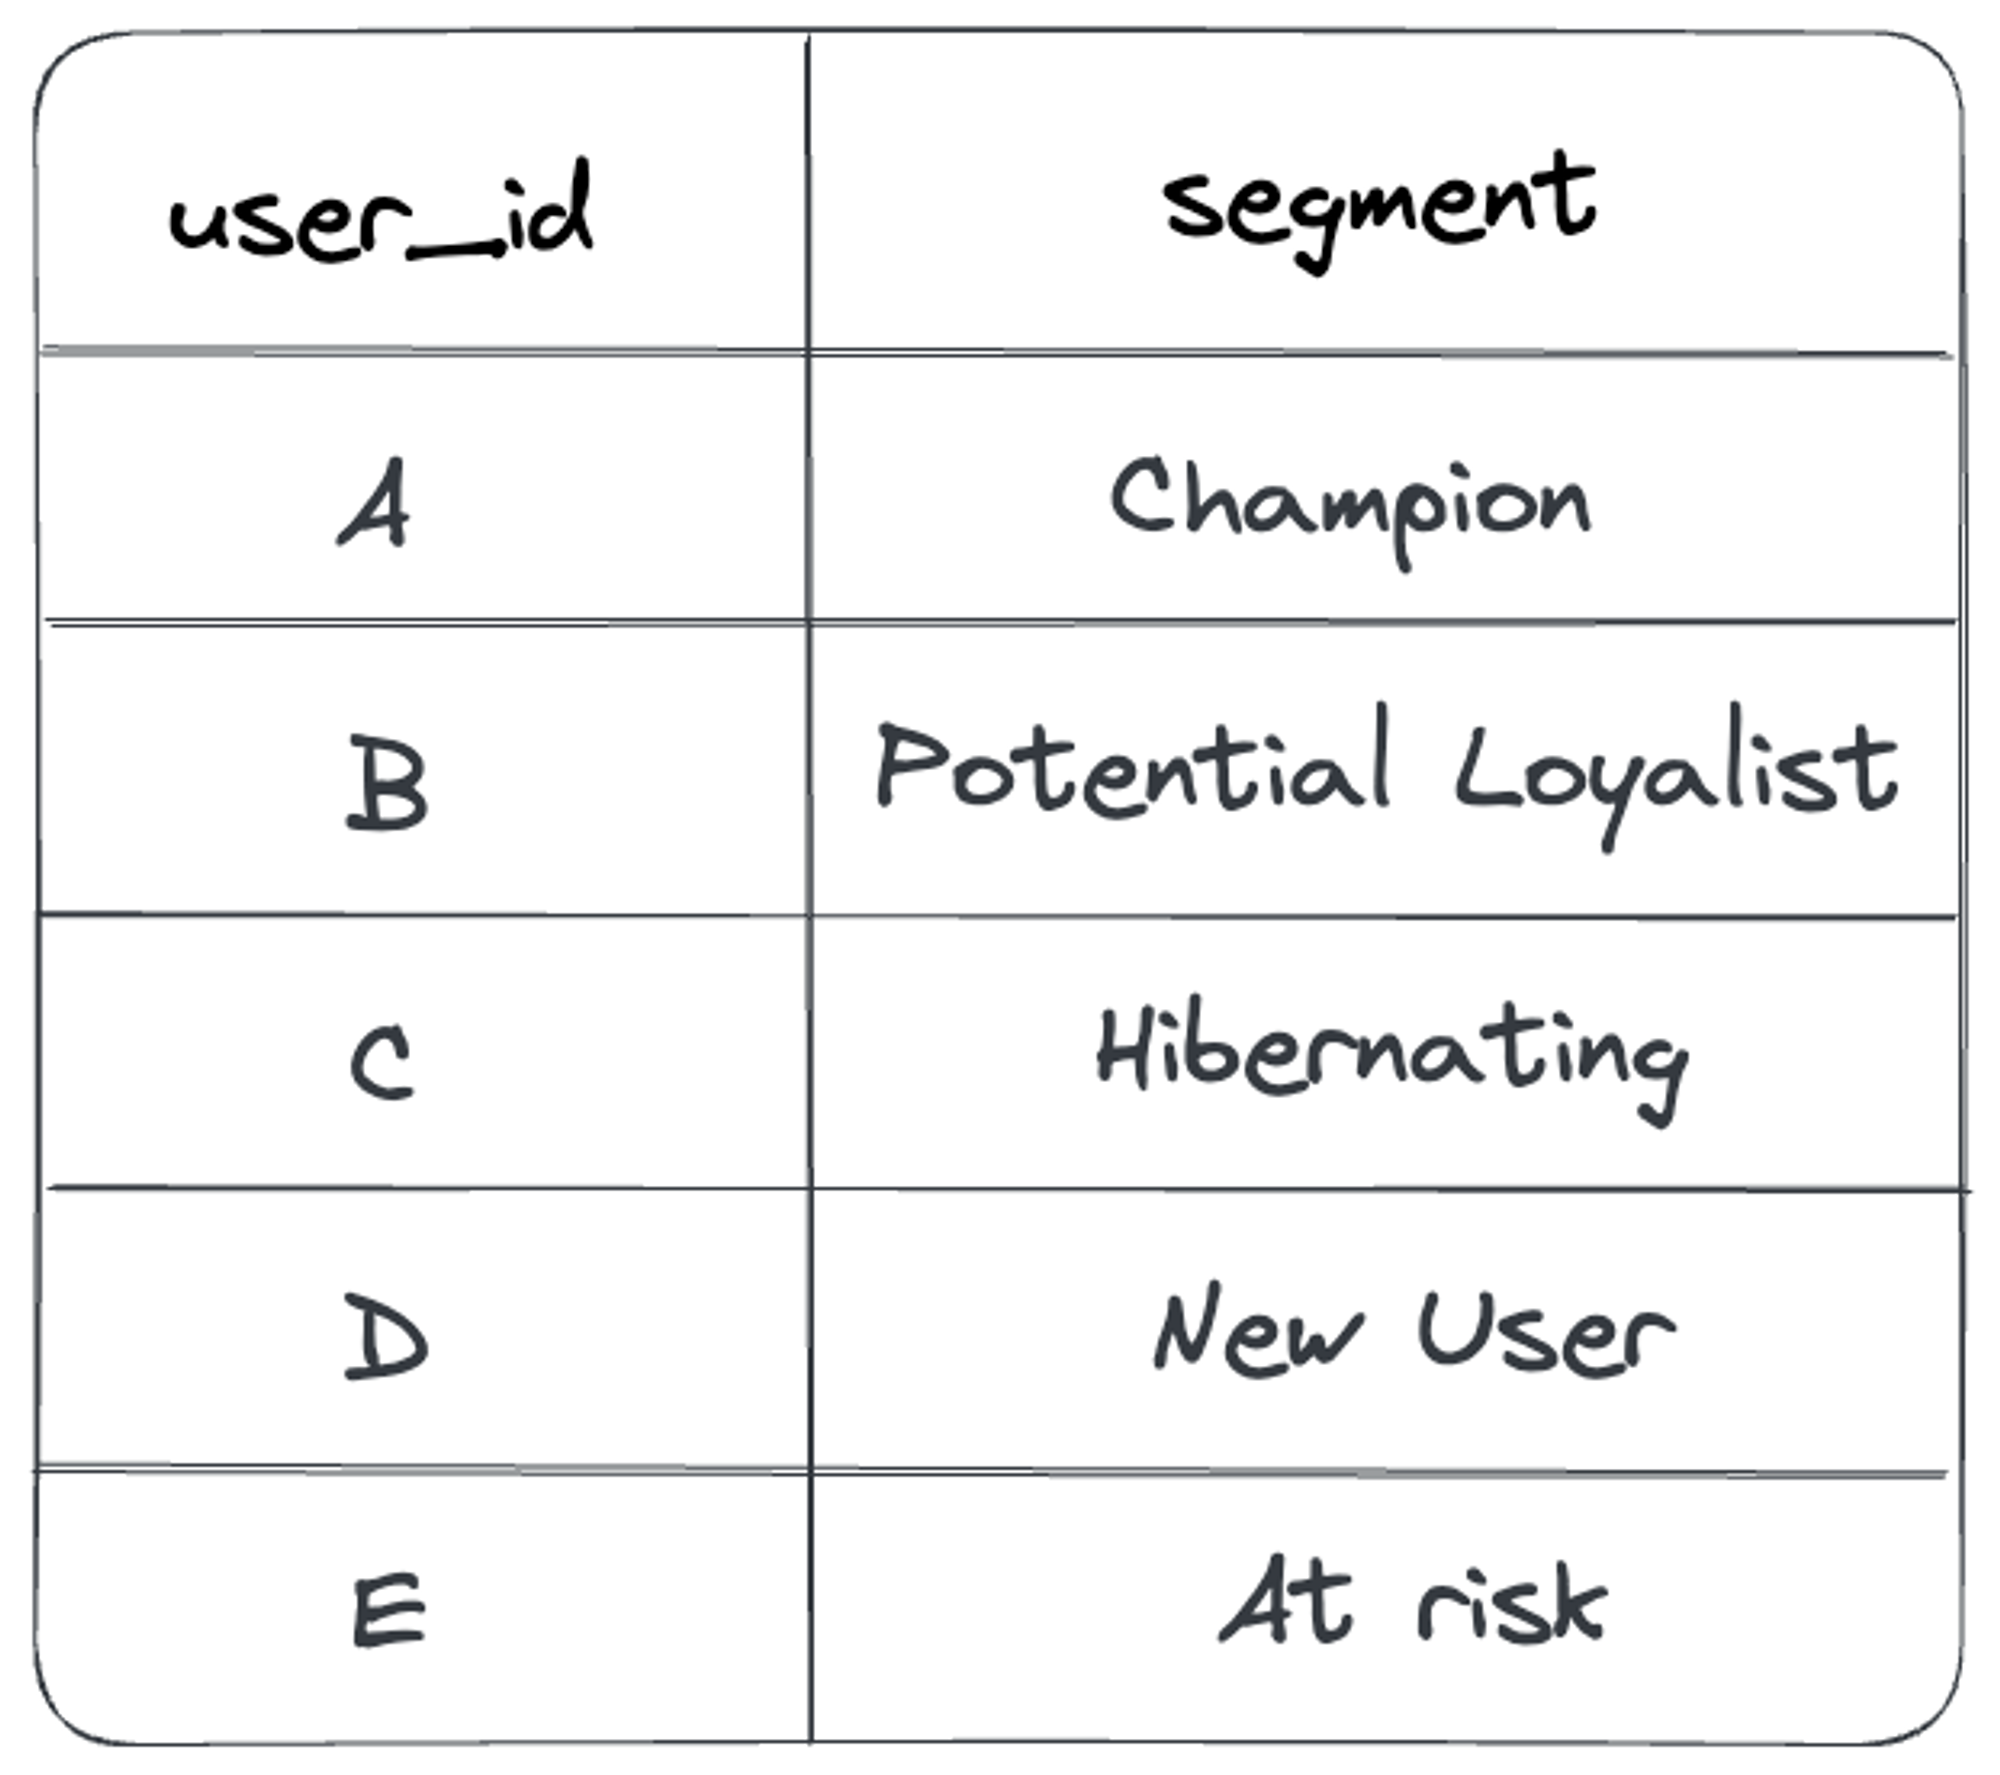 Example of an RFM user segmentation